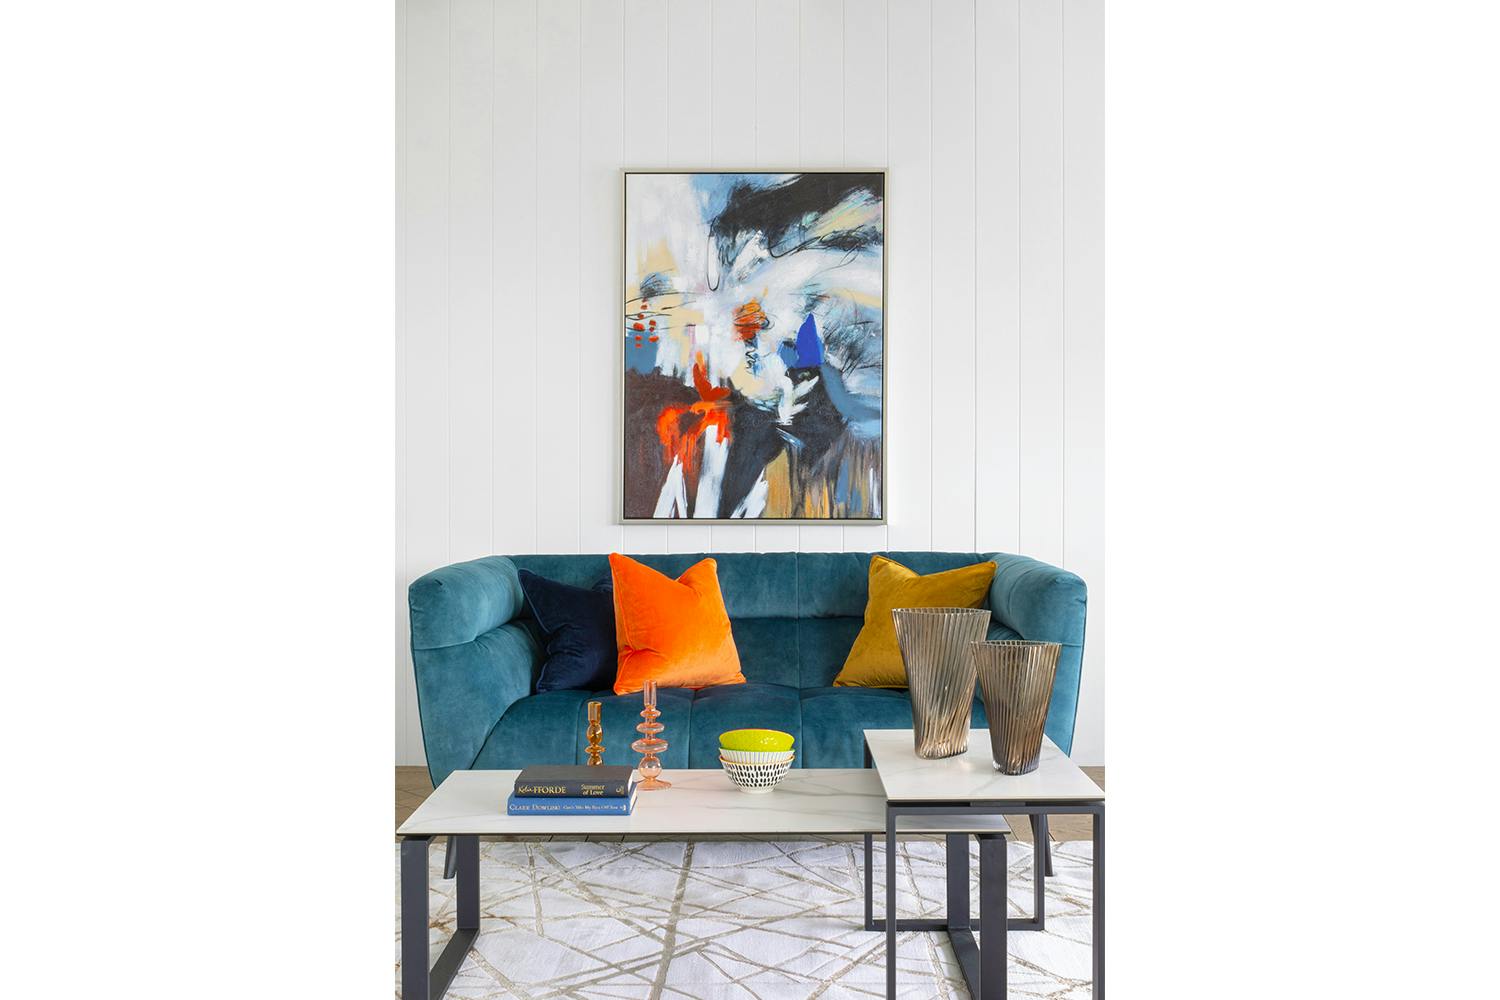 Bellini Cushion | Orange | 45 x 45 cm